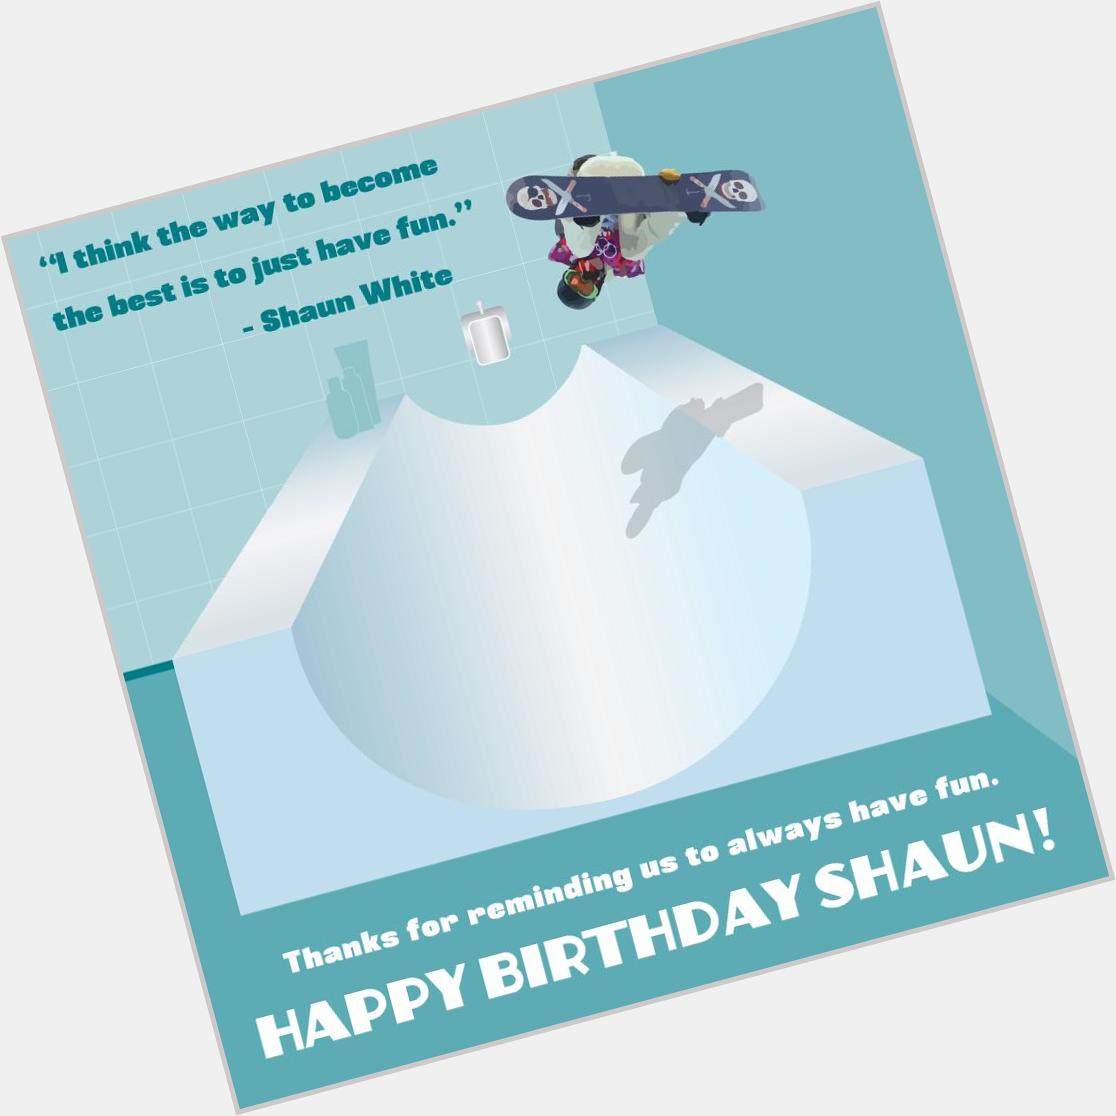 Happy Birthday Shaun White! 